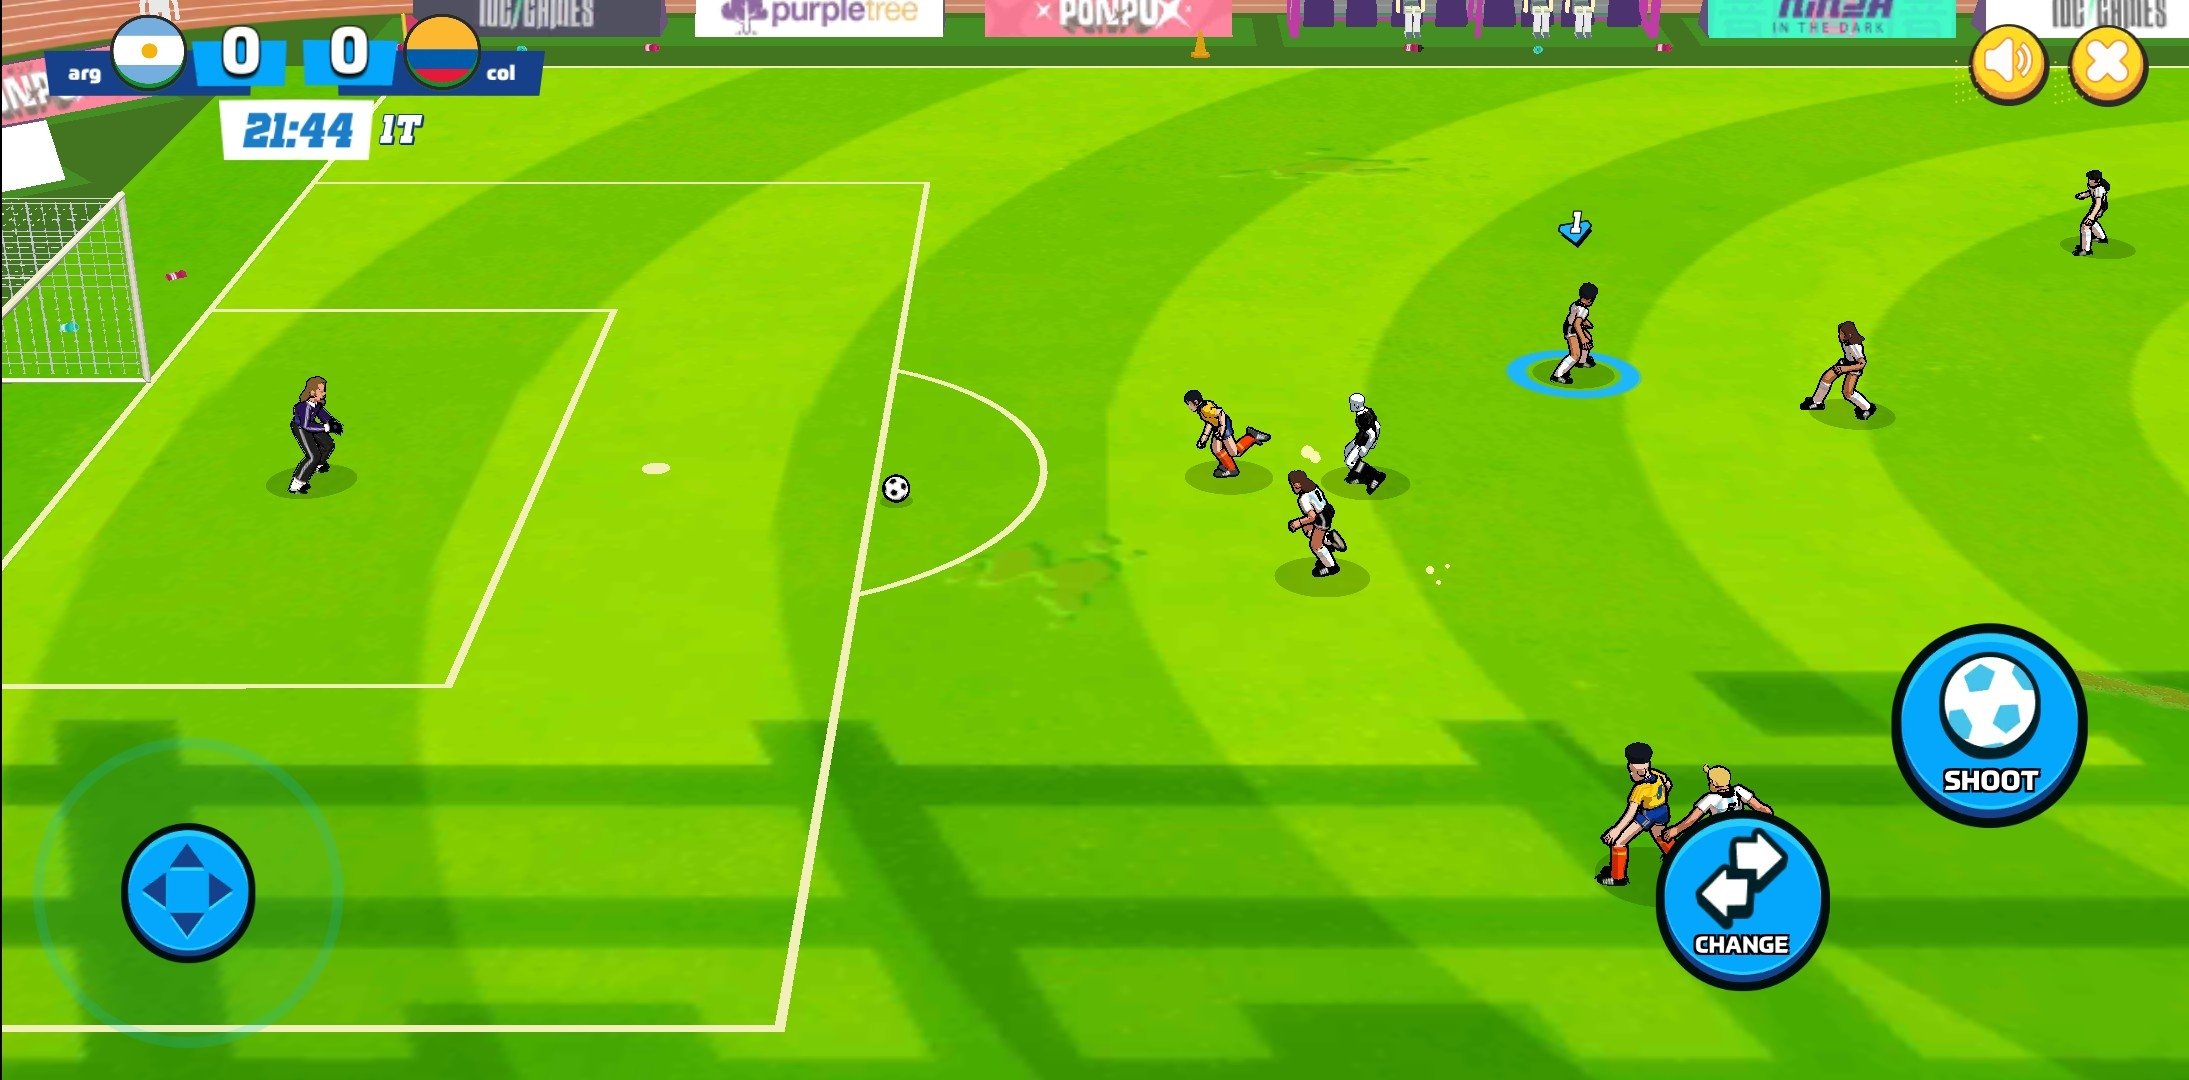 Download Futemax Futebol on PC (Emulator) - LDPlayer